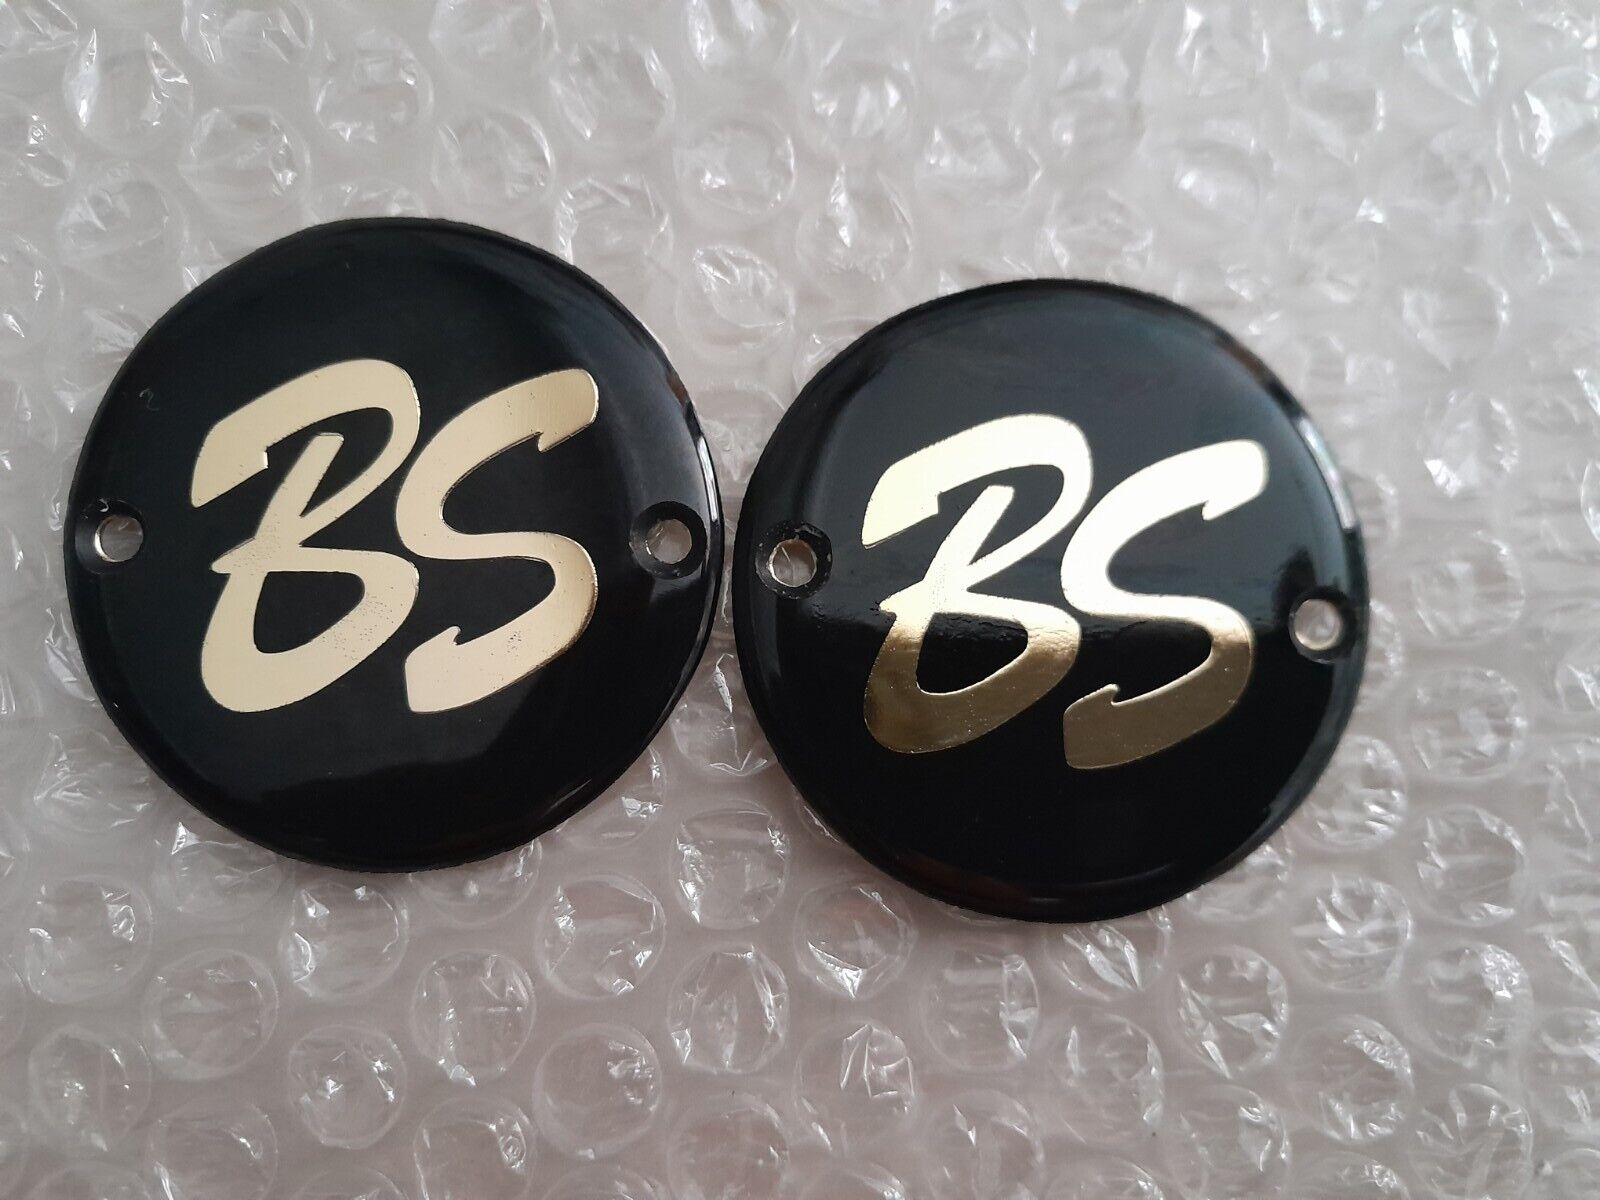 Bridgestone BS hs 175 #Bridgestone Gas Tank Emblem Badge  Pair